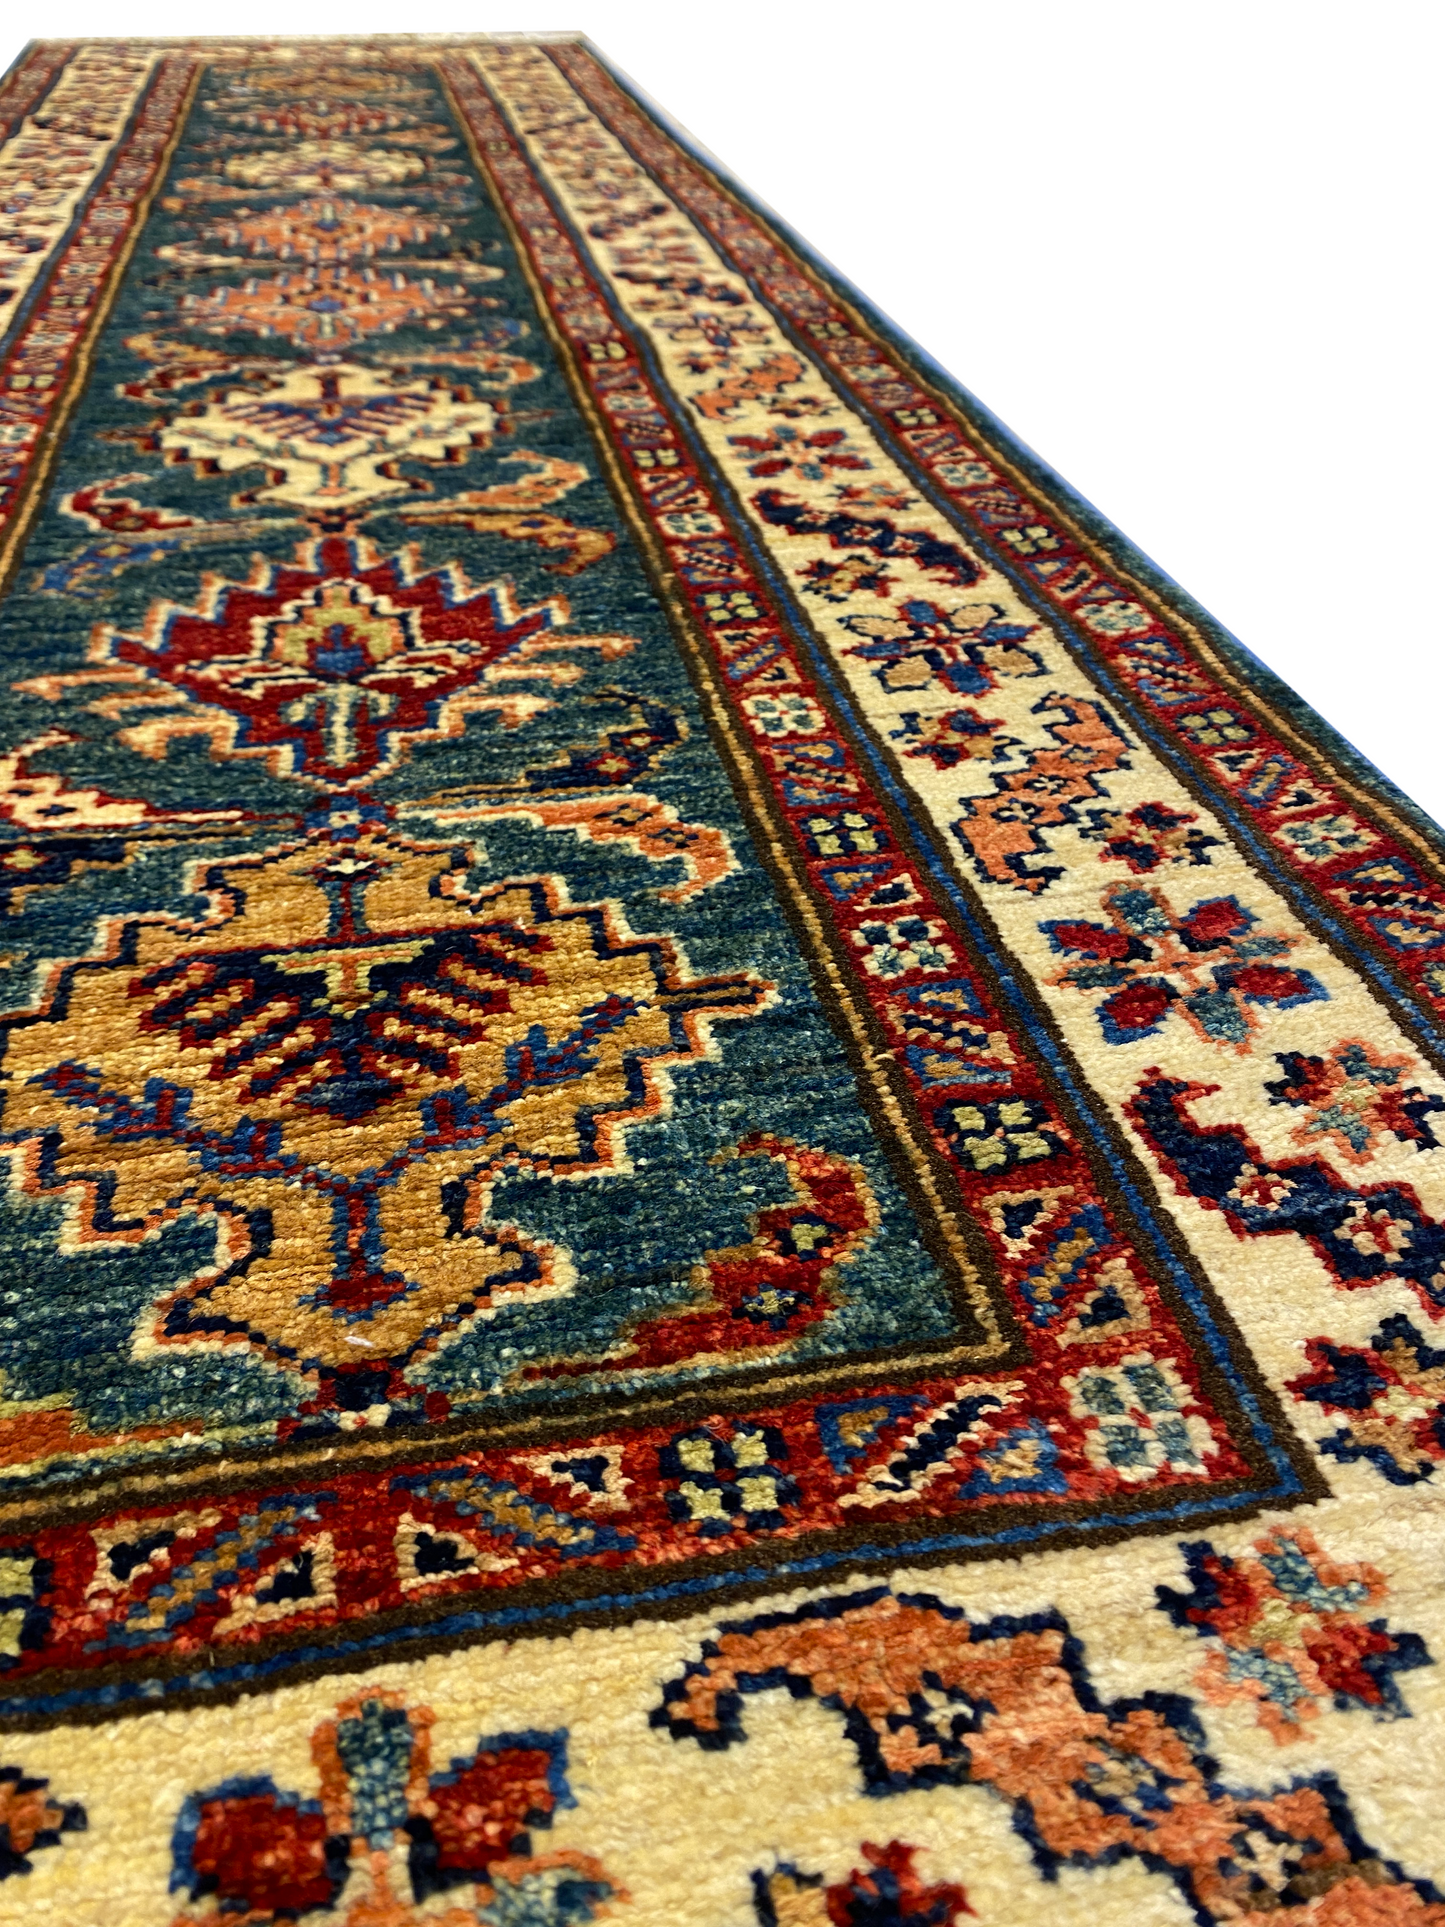 Şirvan Runner Carpet 193 X 60 cm